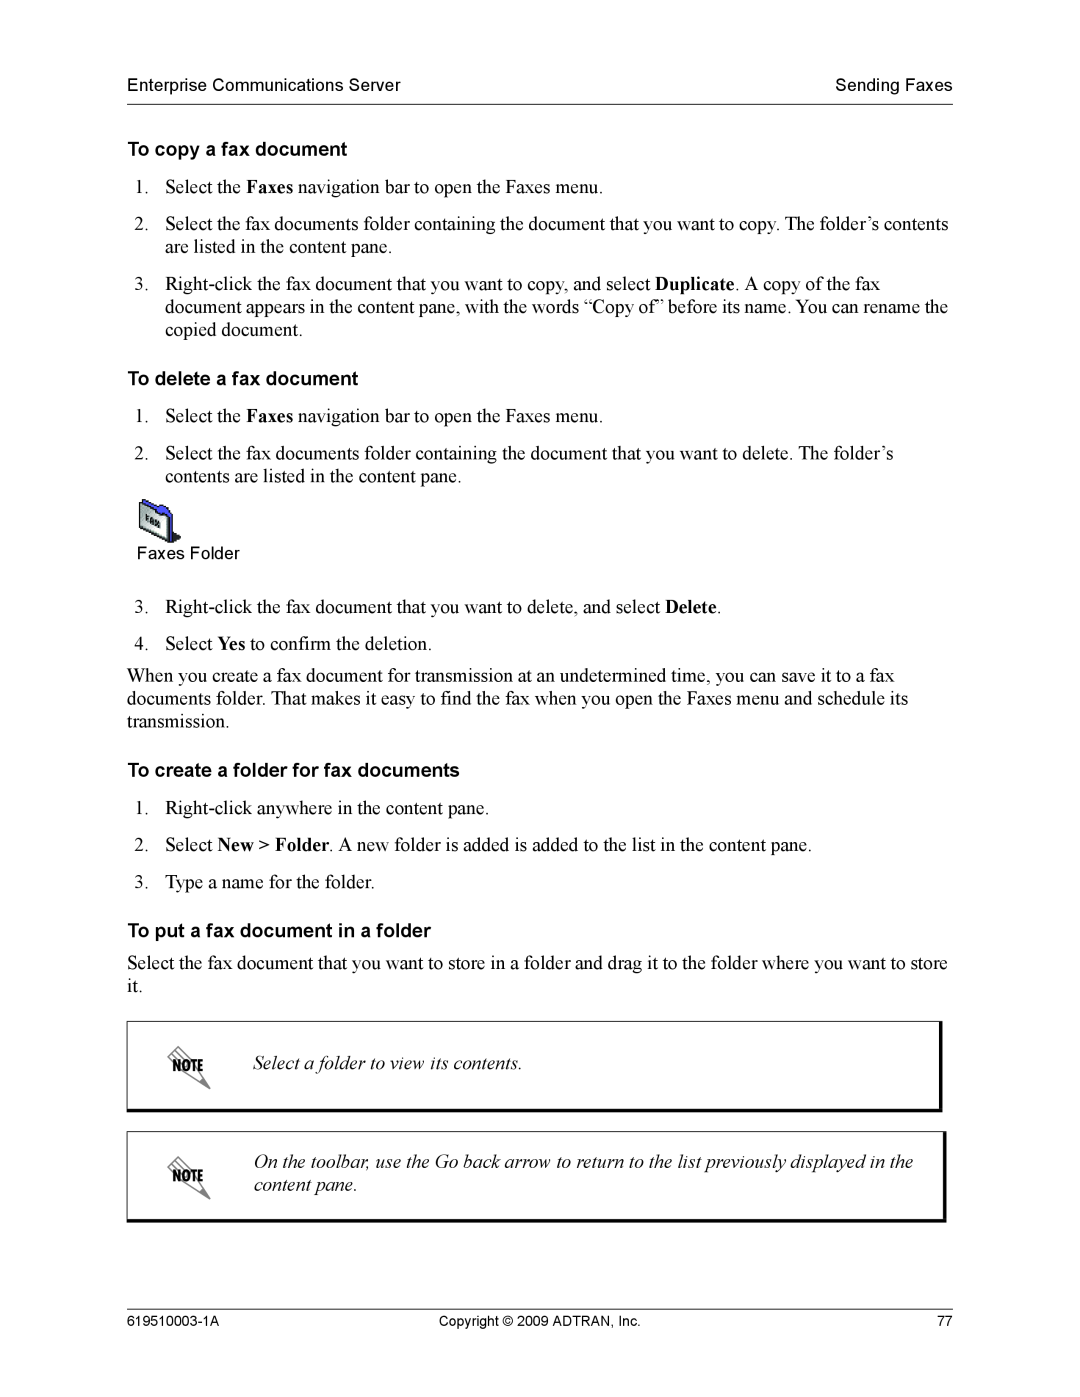 ADTRAN 619510003-1A manual To copy a fax document, To delete a fax document, To create a folder for fax documents 